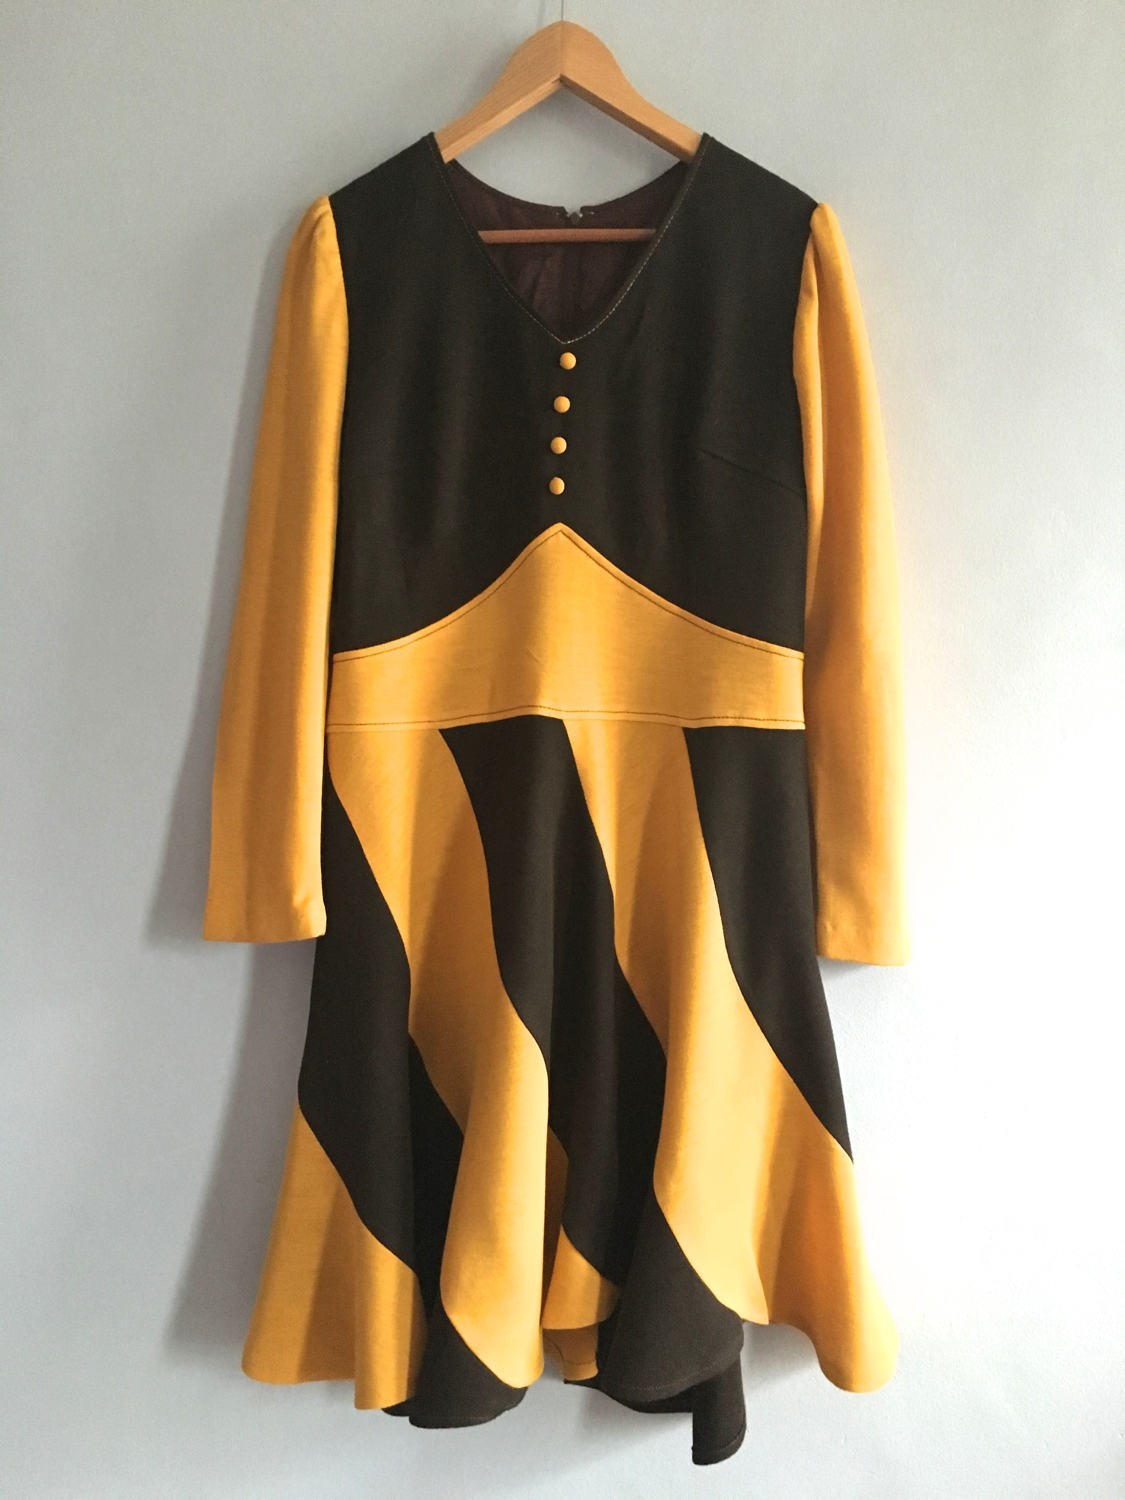 Vintage 70s swirl dress 1970s swirl dress full skirt bias cut dress panels swirl Peggy Olson barber shop dress mustar...